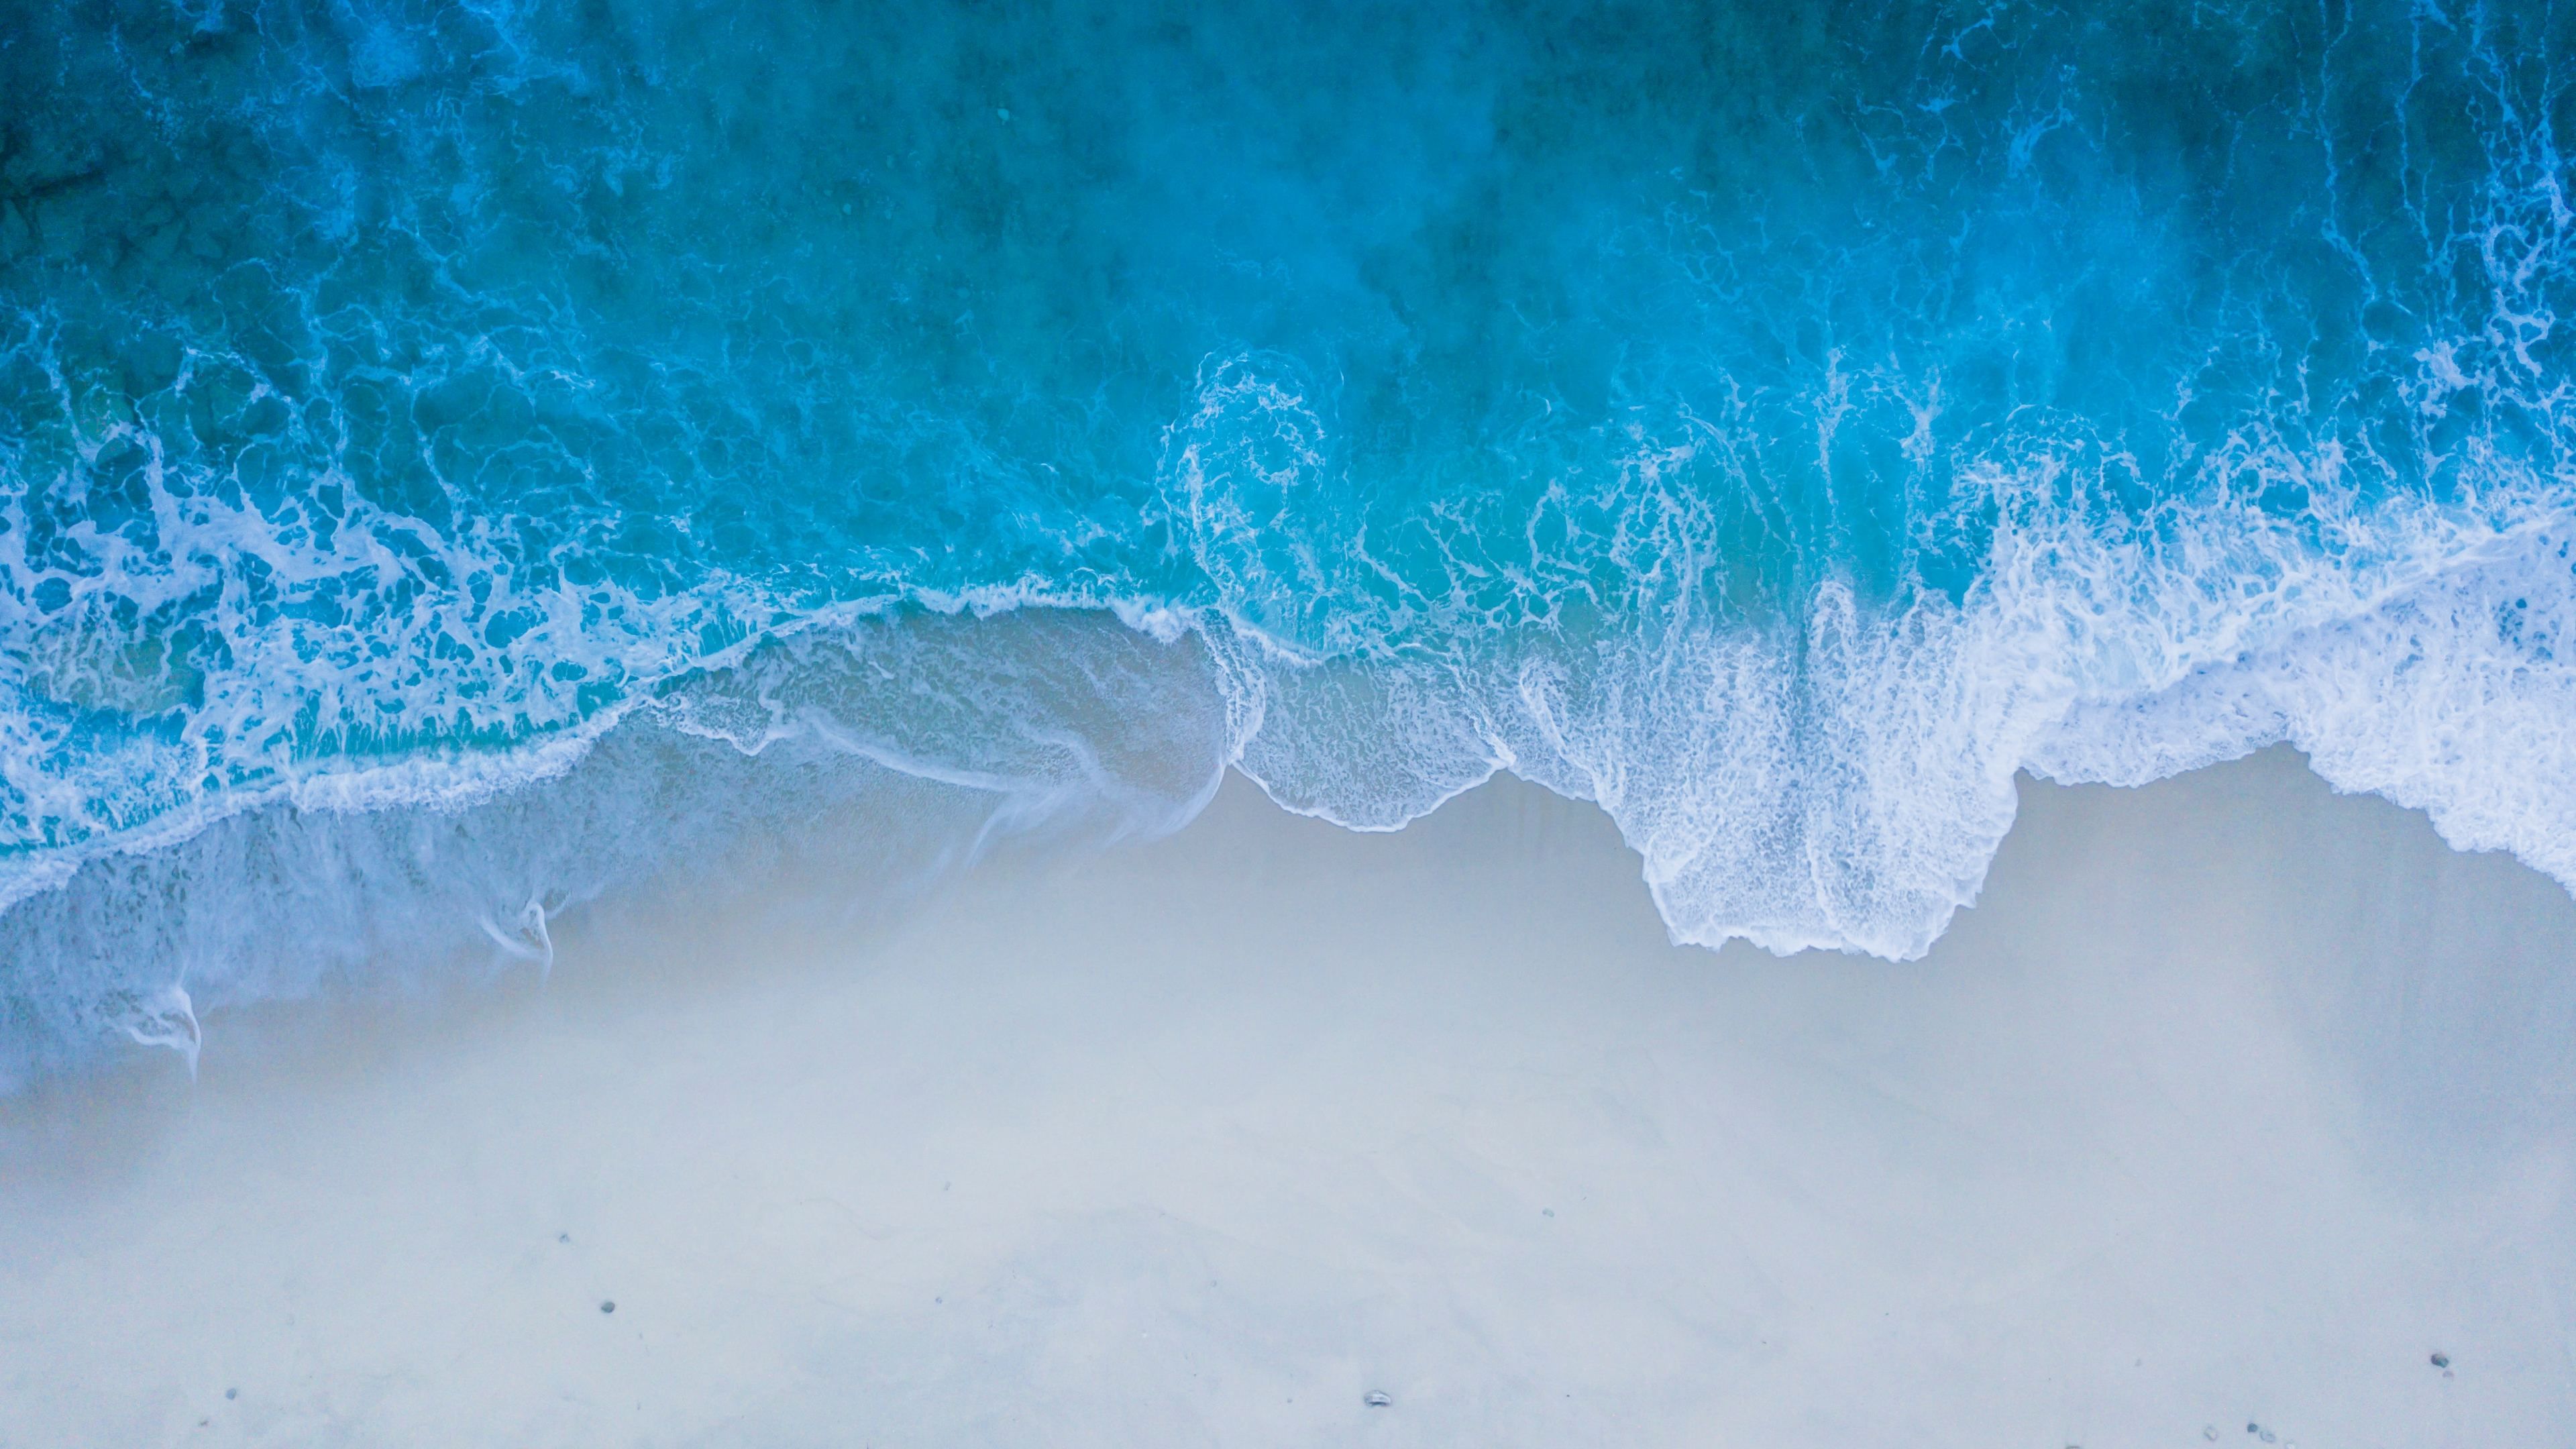 Beach Shore Blue Water 4k Waves Wallpaper, Shore Wallpaper, Nature Wallpaper, Hd Wallpaper, Beach Wallpape. Waves Wallpaper, Nature Wallpaper, Beach Wallpaper